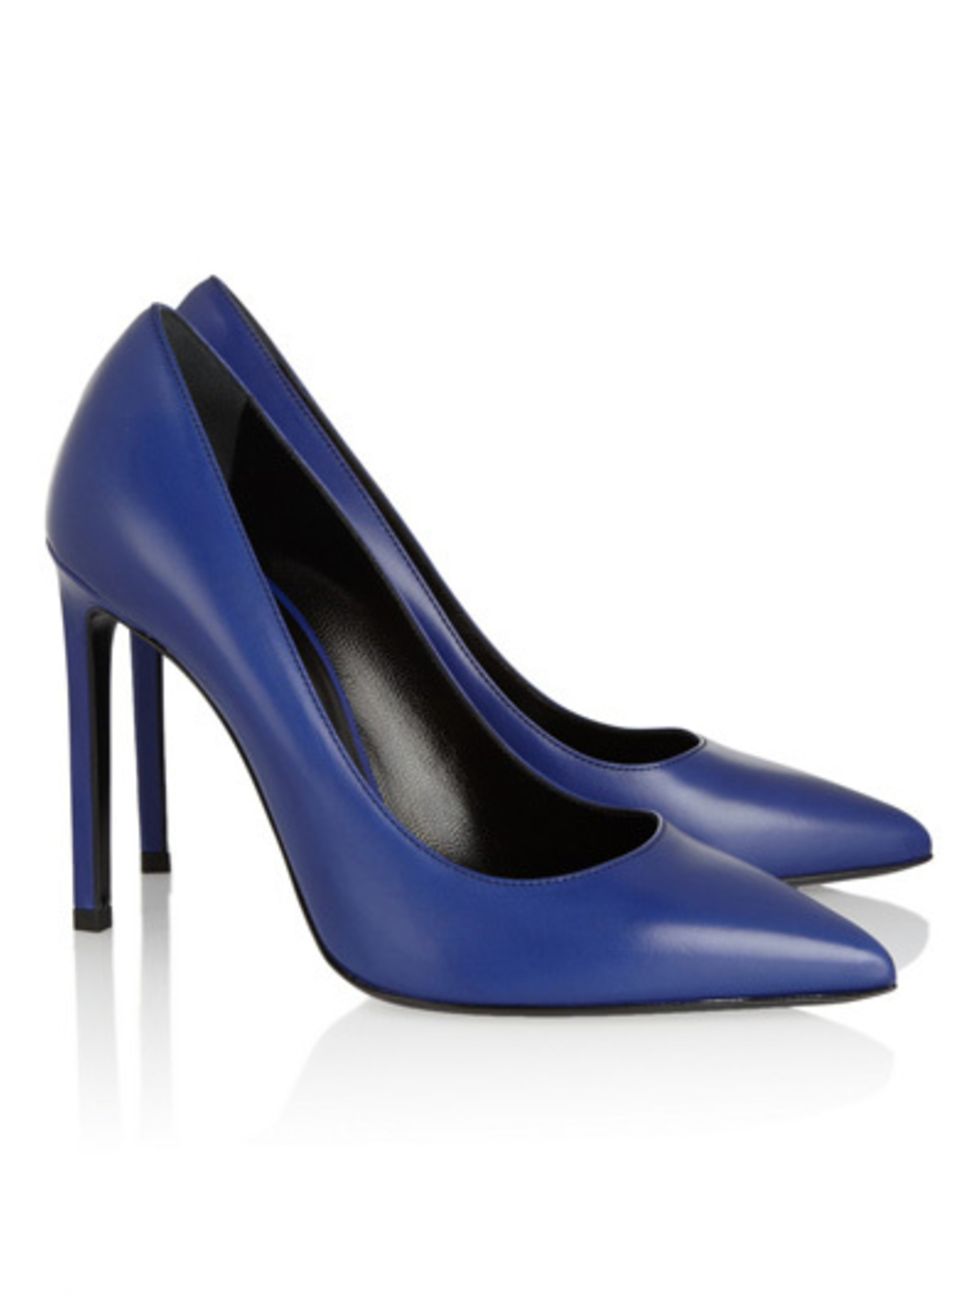 Footwear, Blue, High heels, Electric blue, Basic pump, Aqua, Court shoe, Leather, Sandal, Dress shoe, 